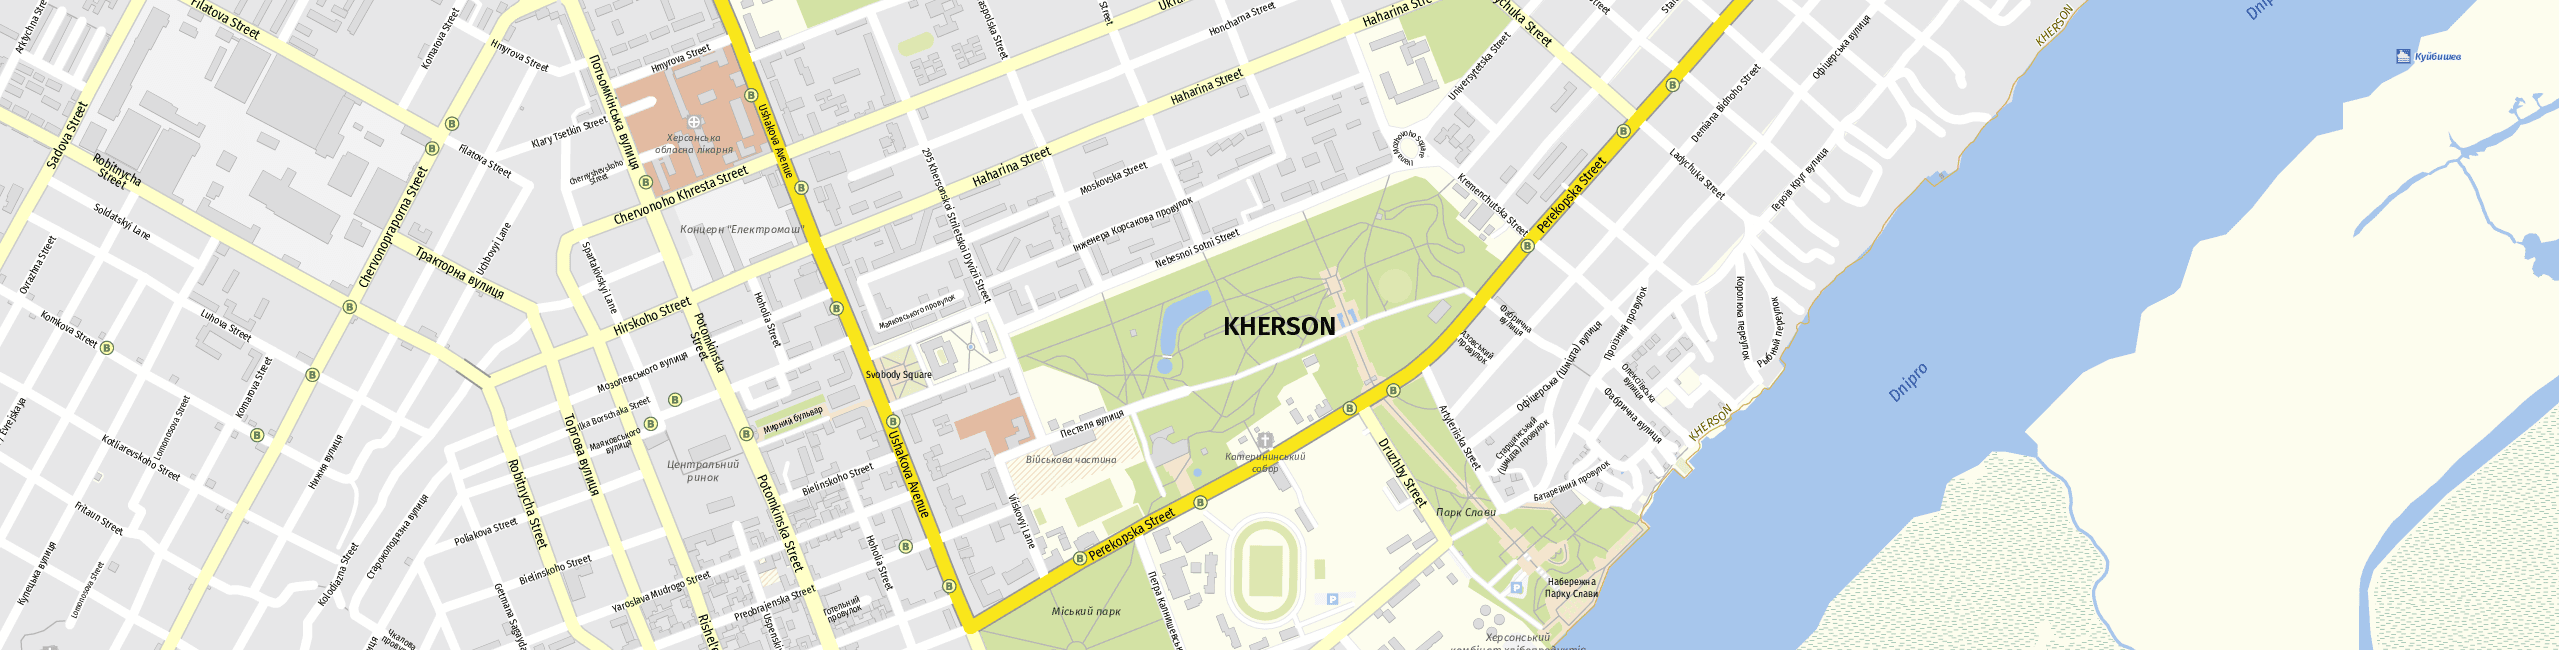 Stadtplan Kherson zum Downloaden.